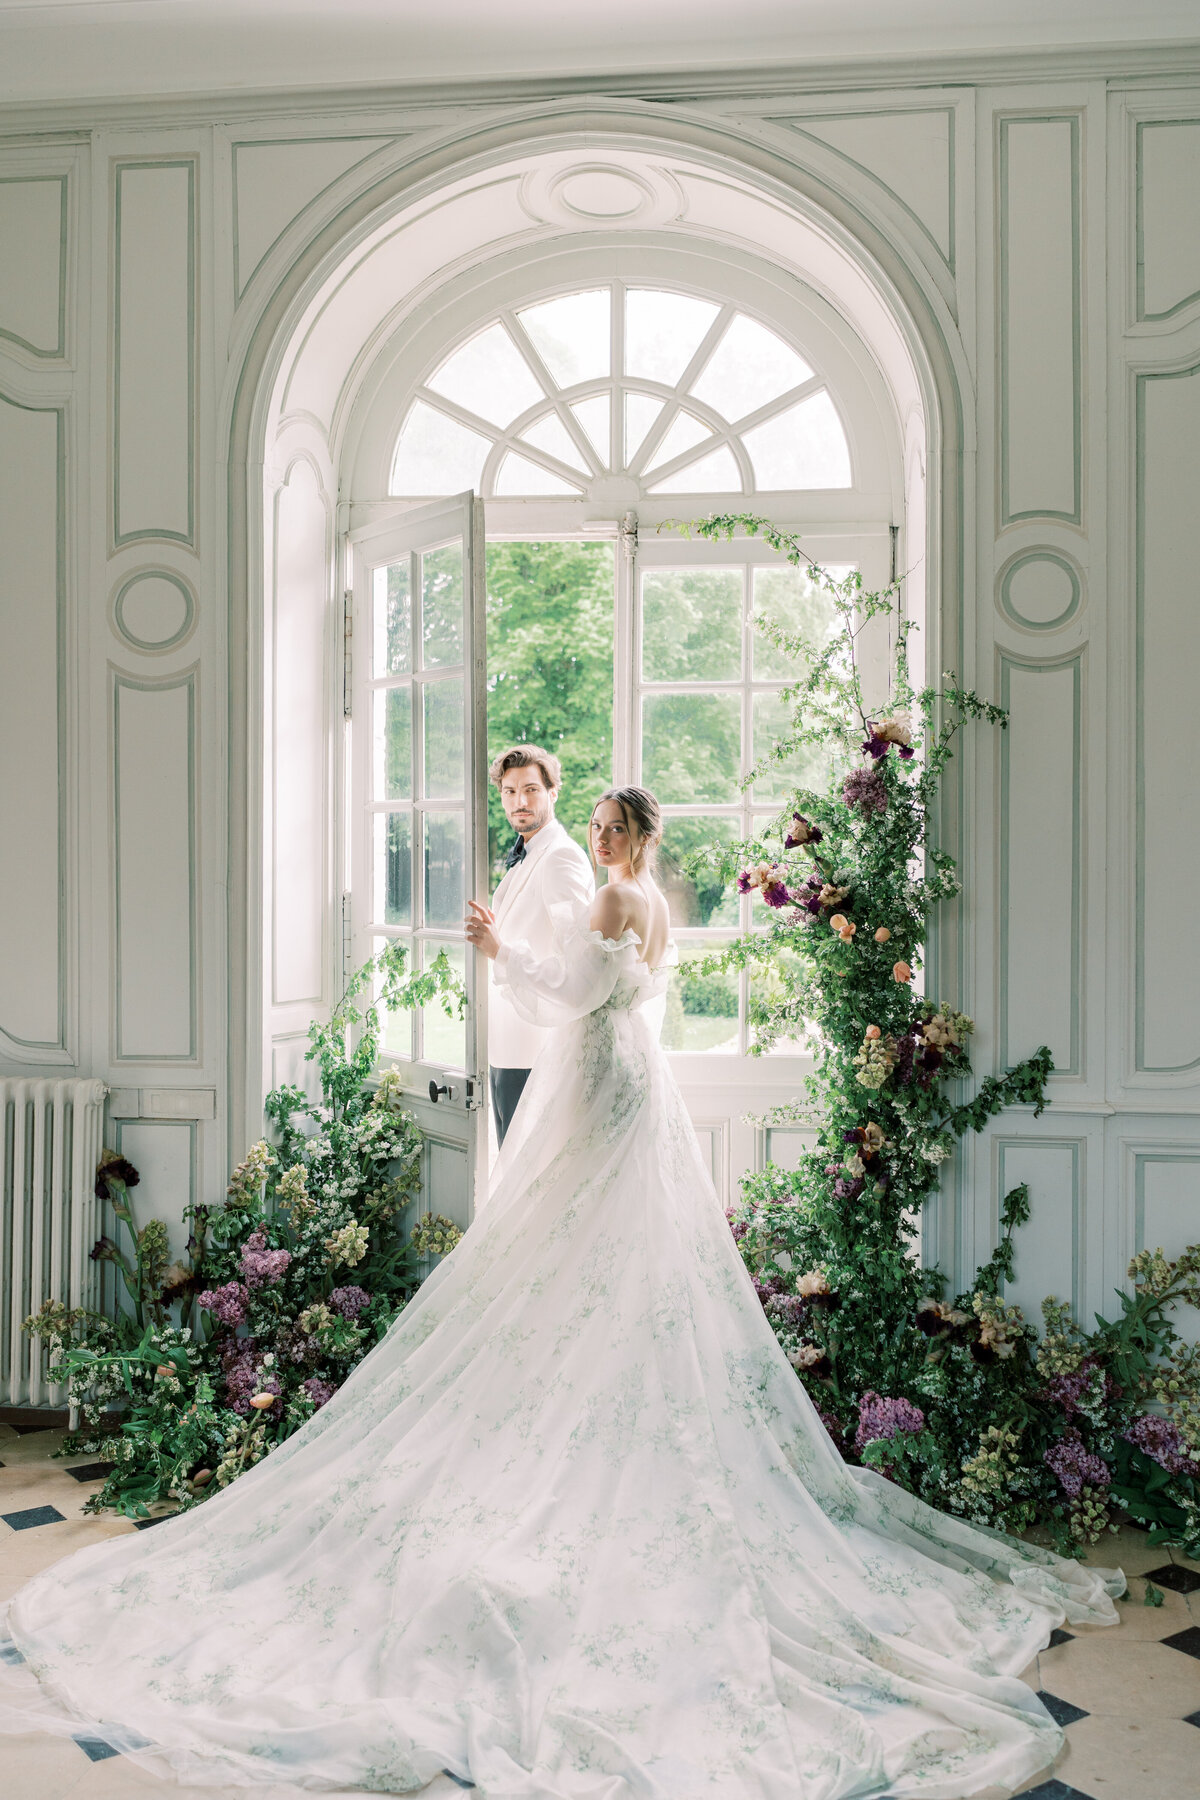 Sarah Rae Floral Designs Wedding Event Florist Flowers Kentucky Chic Whimsical Romantic Weddings28